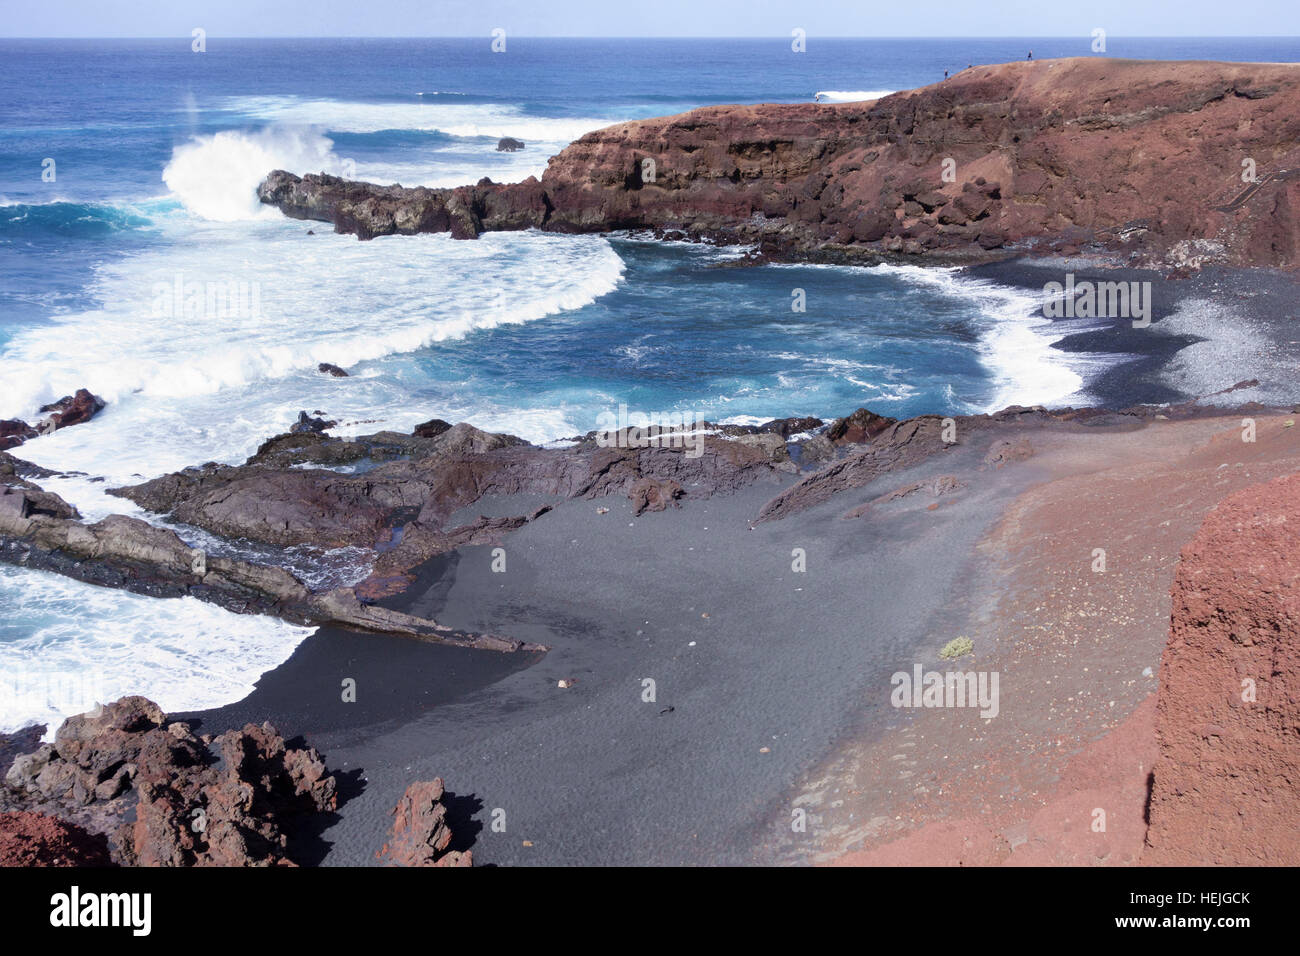 Spiaggia vulcanica, El Golfo, Lanzarote, Isole canarie, Spagna Foto Stock